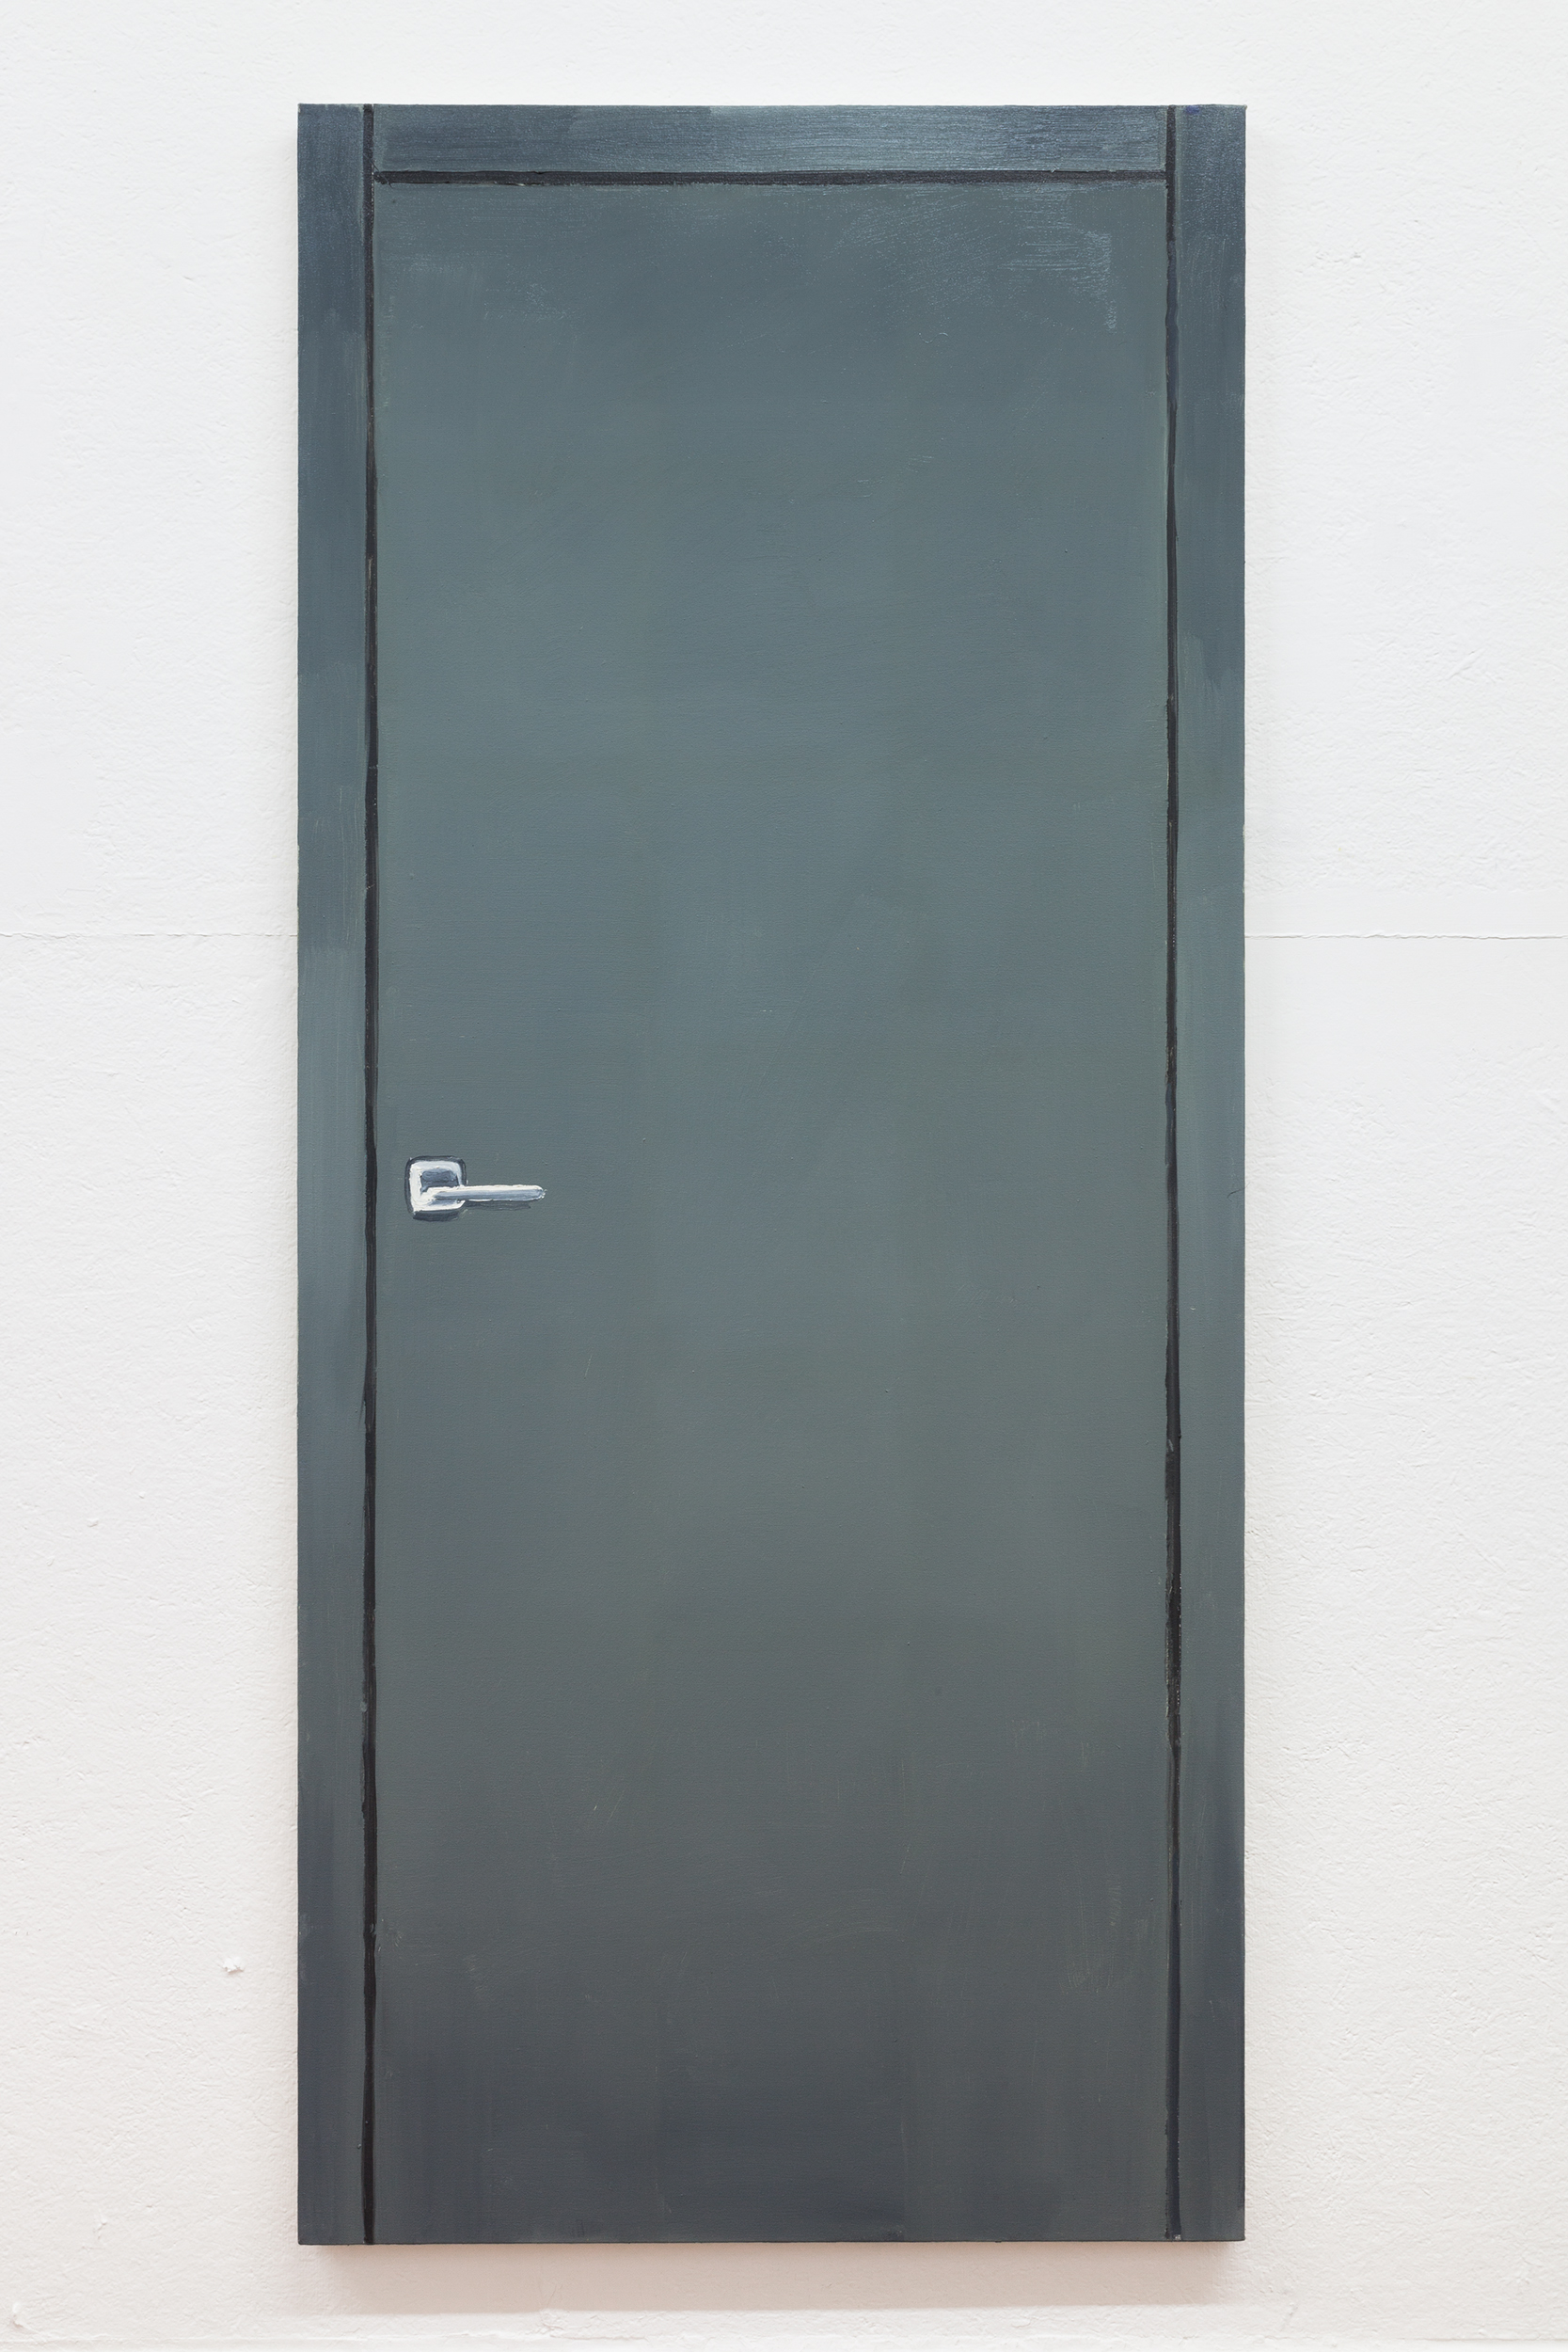  Richard Bosman,  Ad Reinhardt Door , 2016, Oil on canvas, 72 x 32 inches 